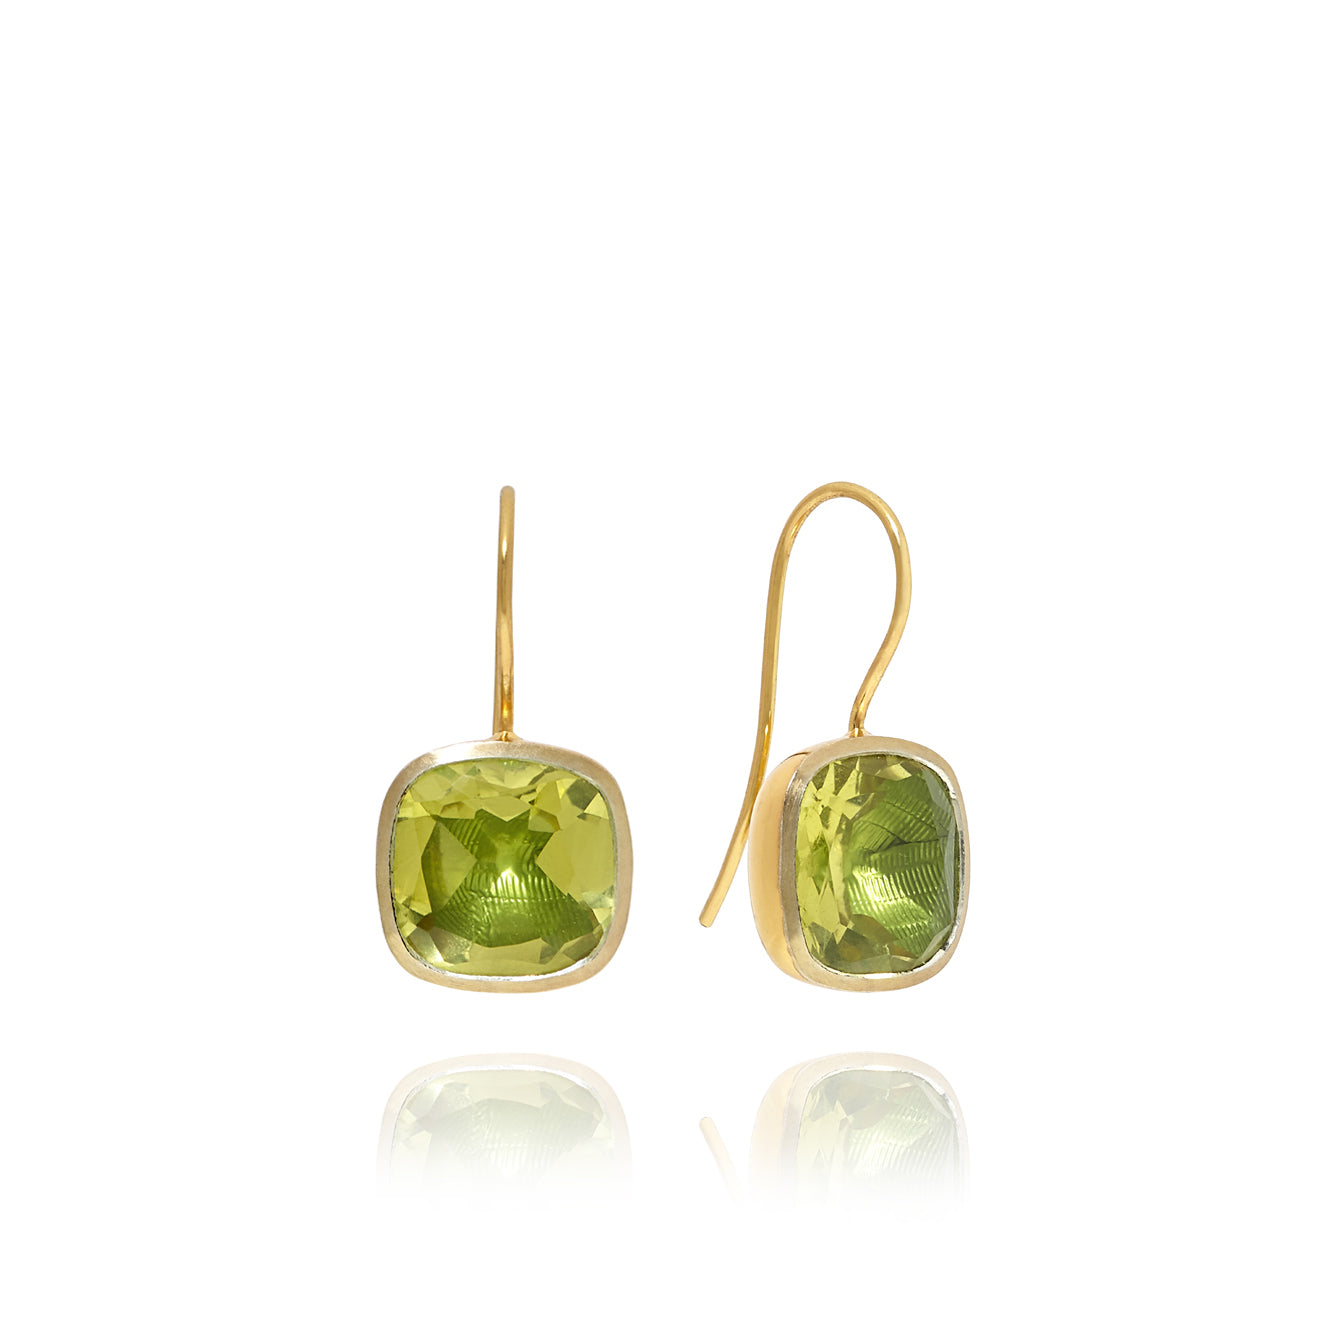 Luzia Button Earrings in Lemon Quartz (14k Gold)